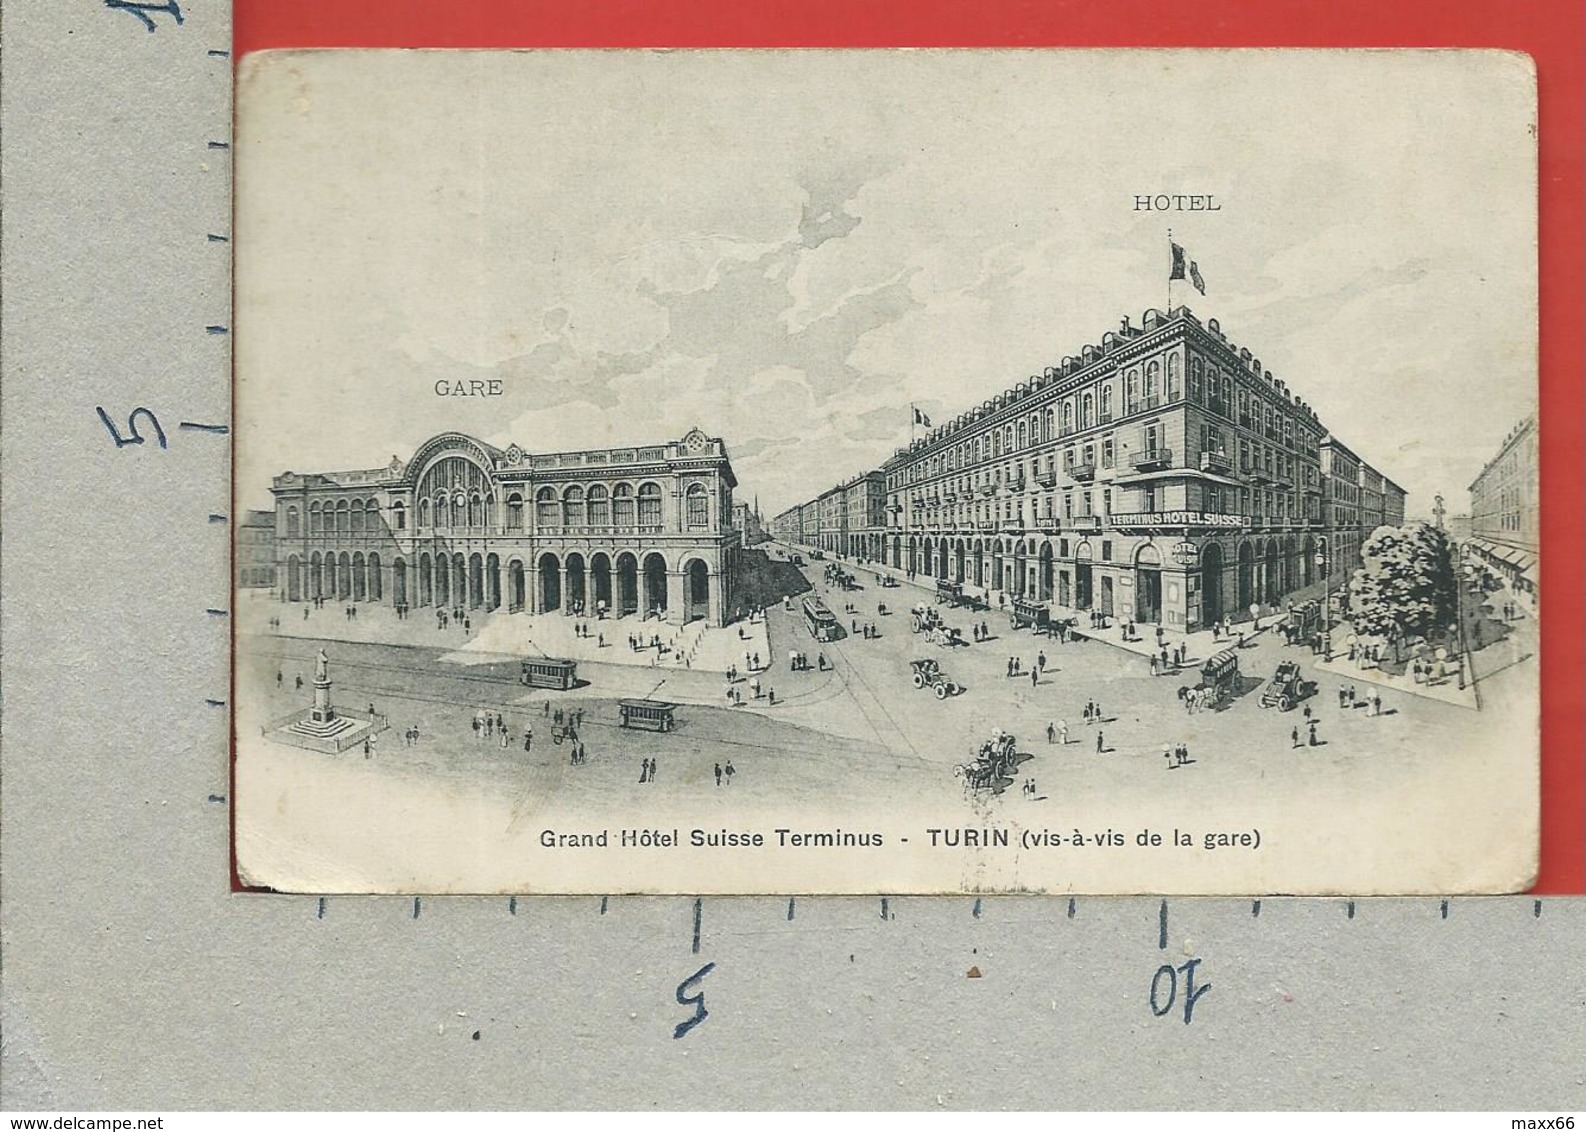 CARTOLINA VG ITALIA - Grand Hotel Suisse Terminus - TORINO TURIN - Vis A Vis De La Gare - 9 X 14 - 1911 - Bars, Hotels & Restaurants